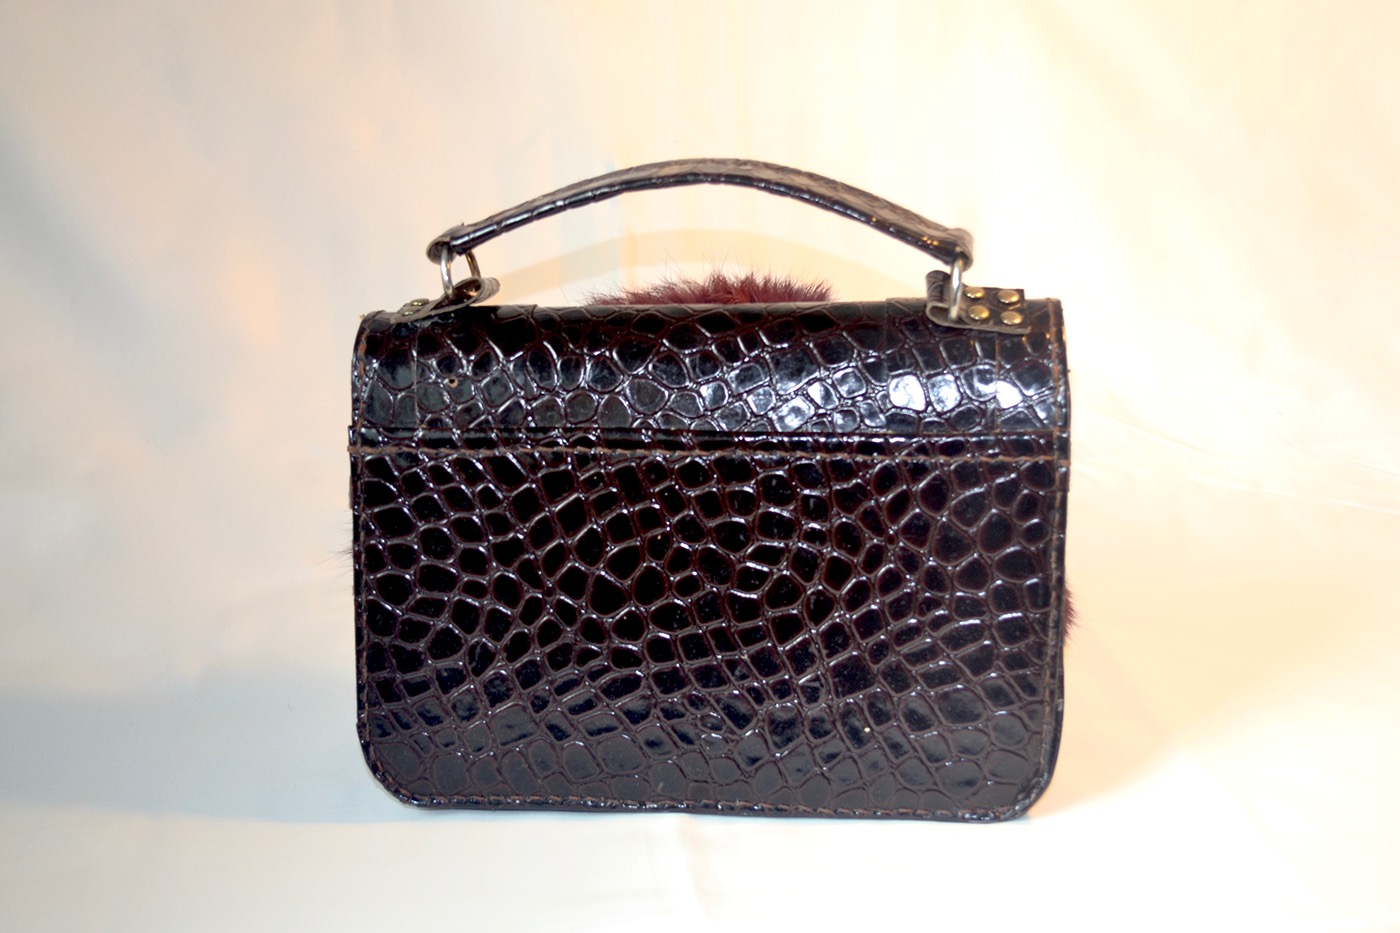 Handstiching handbag accessories leather satchel